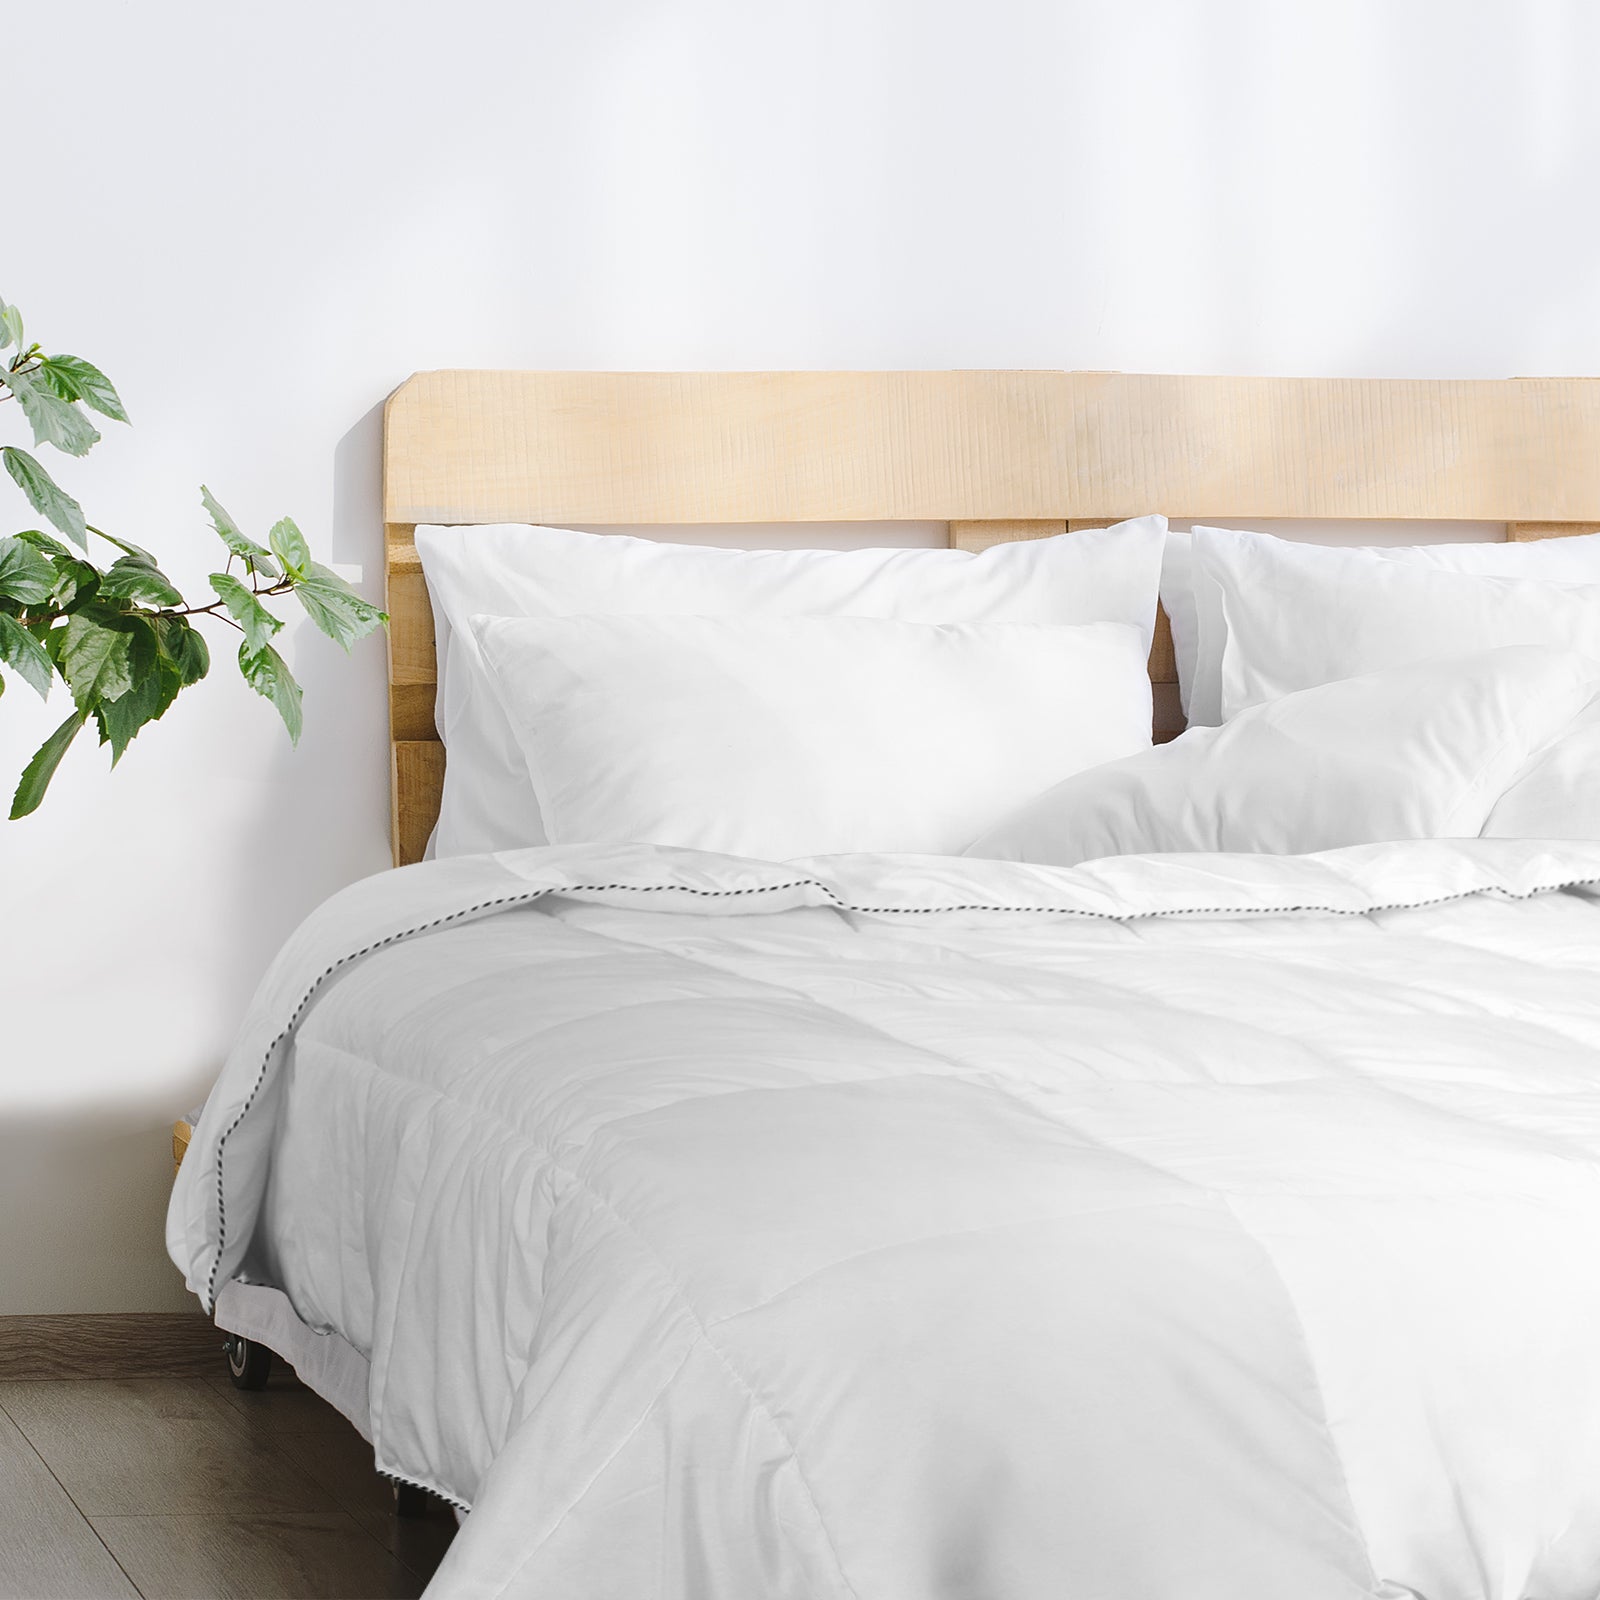 Azure Bed Frame + Comforpedic Mattress + 250GSM Bamboo Quilt Package Deal Set - King